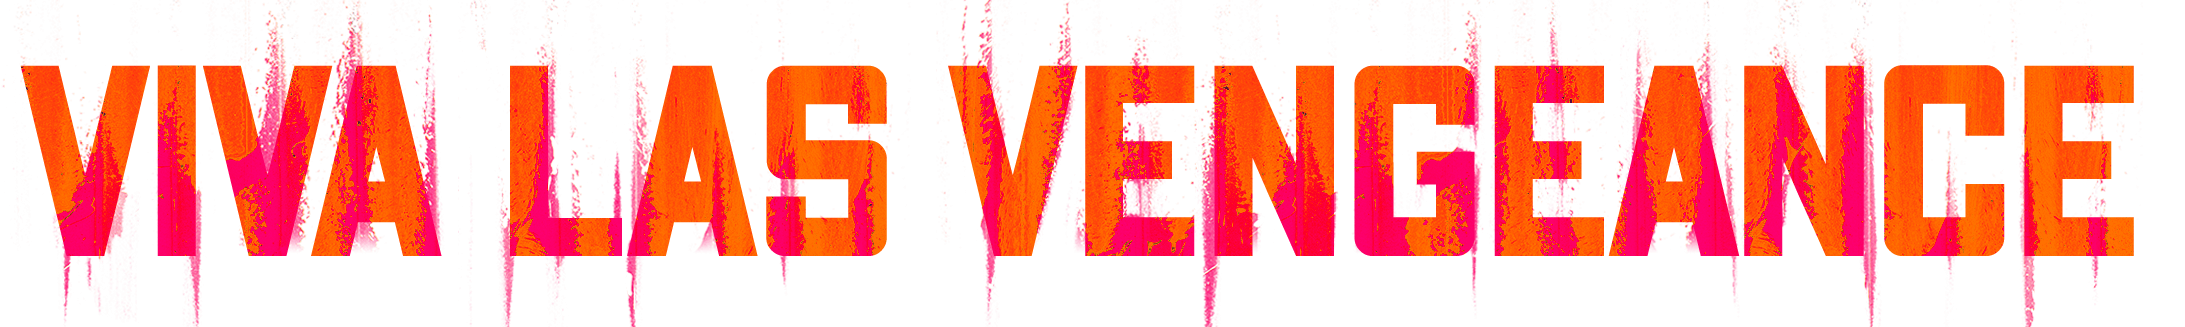 Army of the Dead - Viva Las Vengeance: A VR Experience - New York Logo